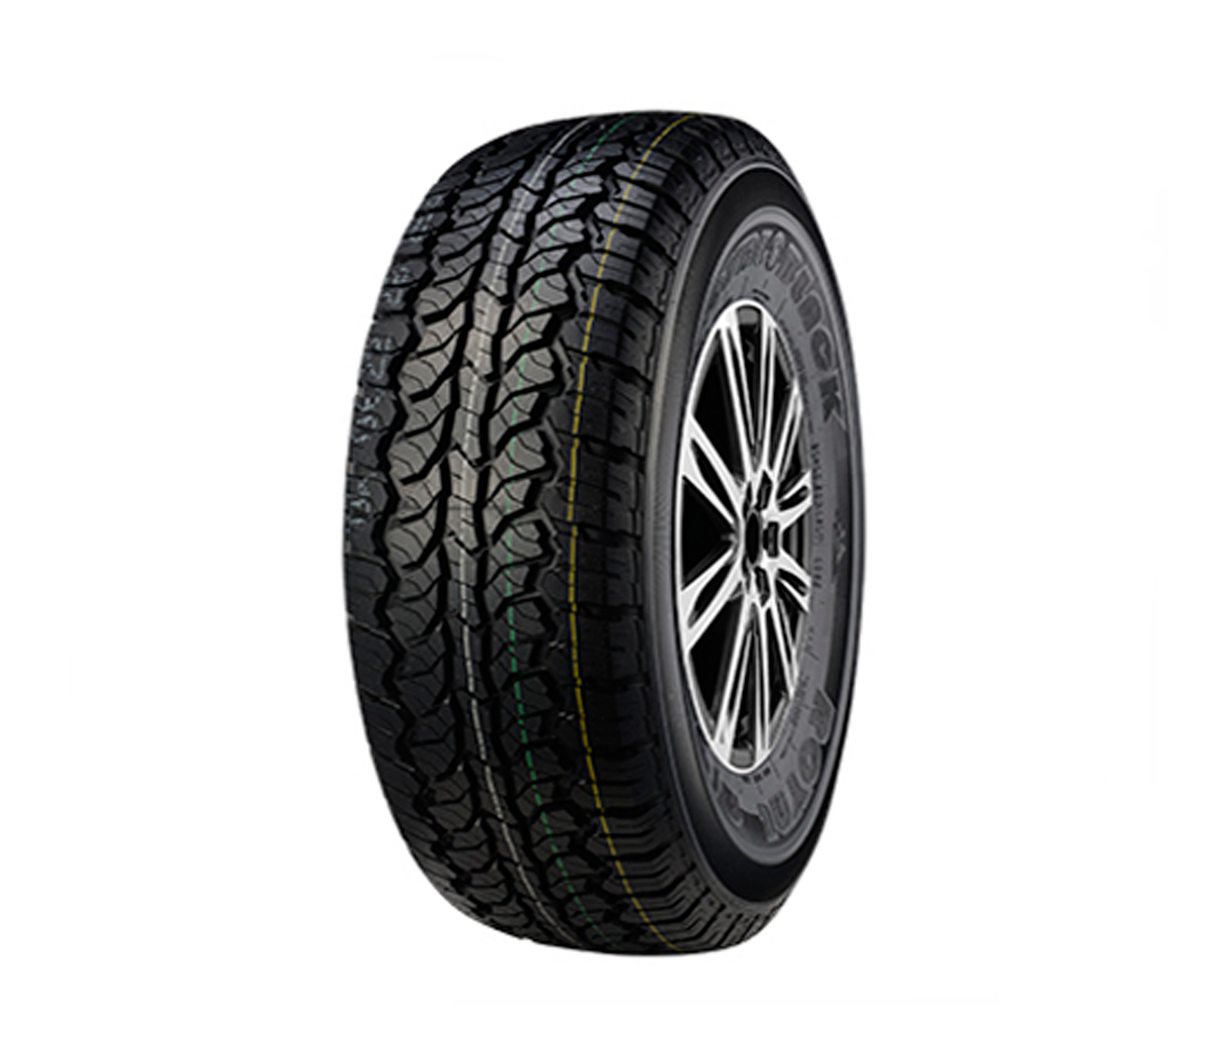 Neumático royal a/t lt245/75r16 120/116s tl Royal Black